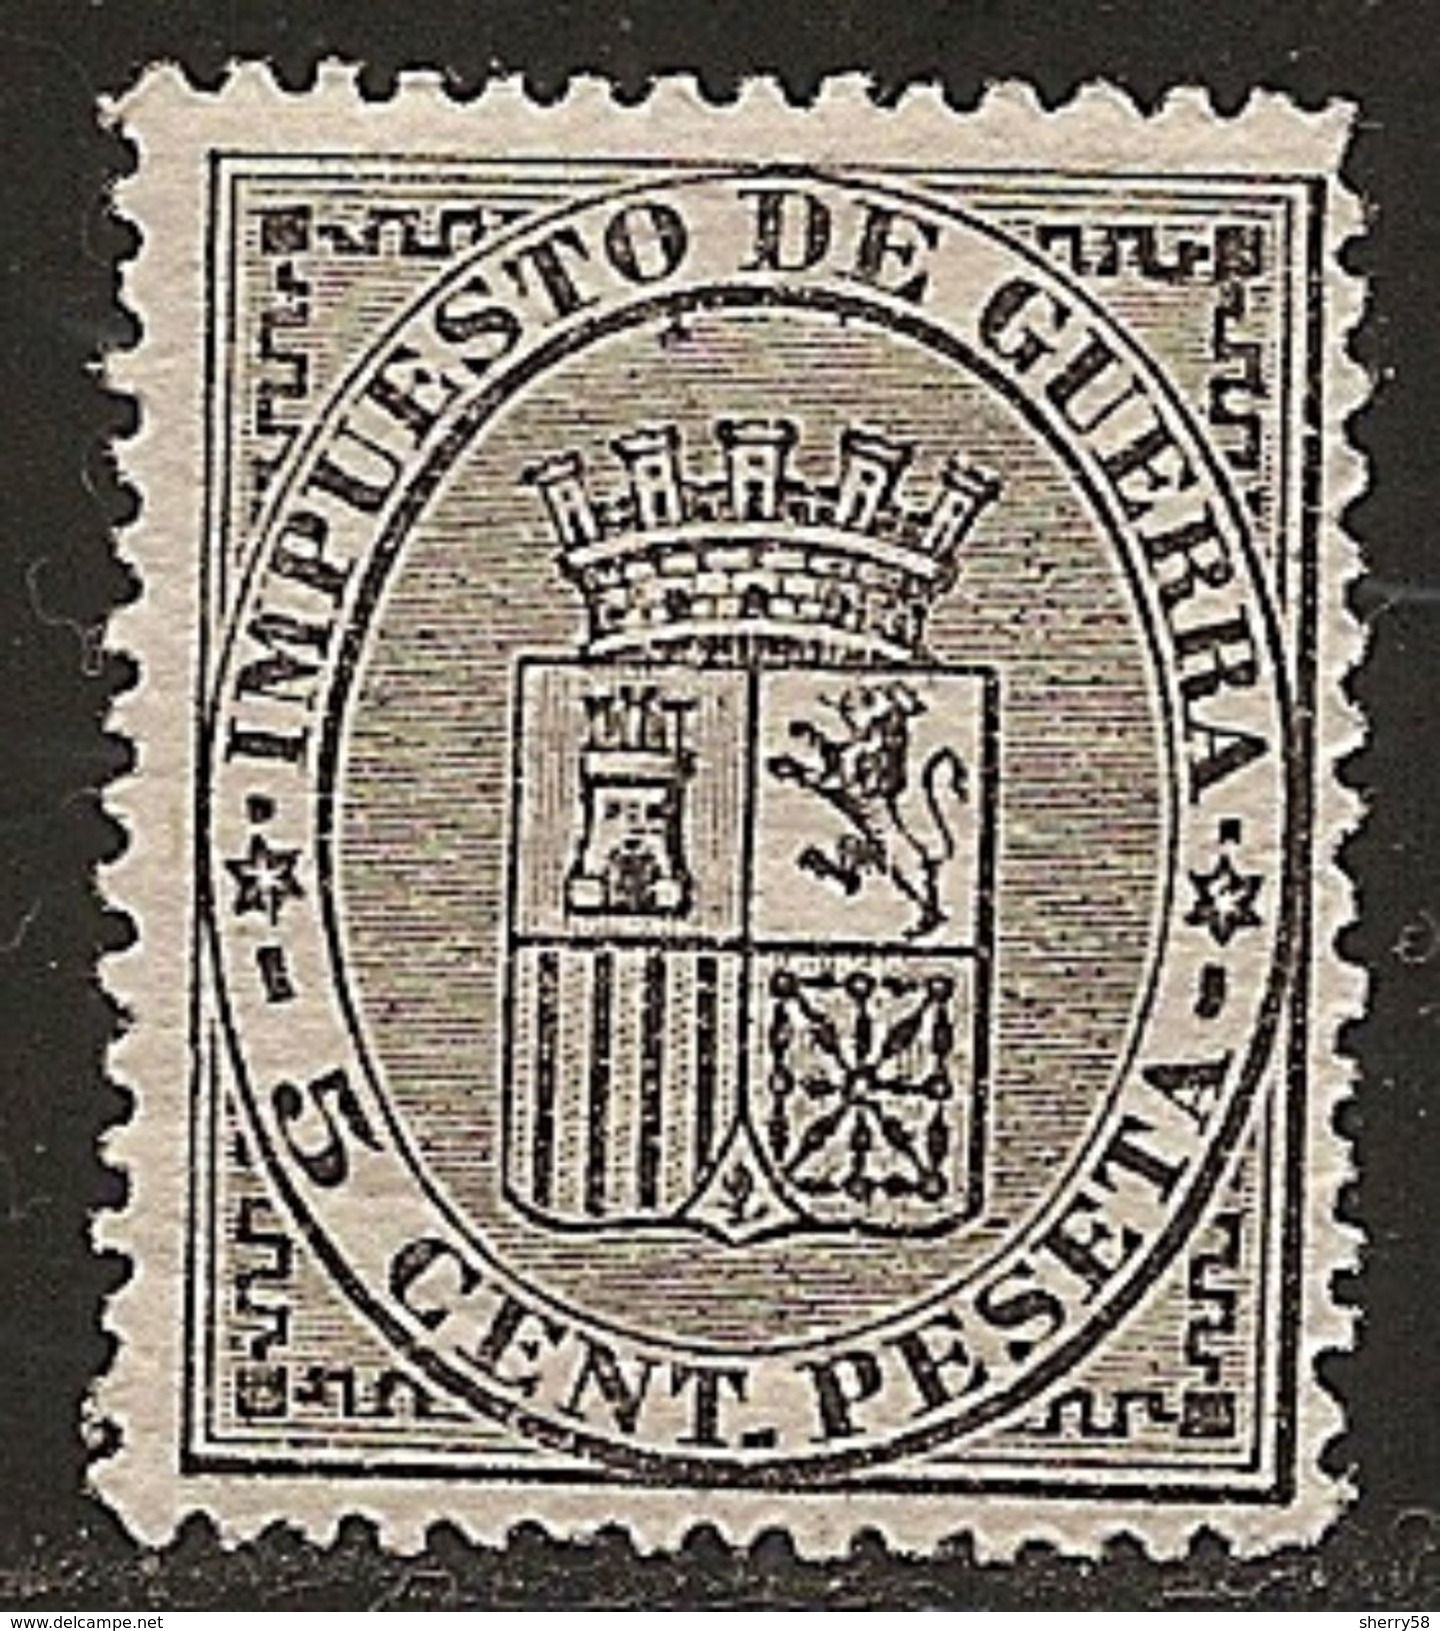 1874-ED. 141 I REPÚBLICA- ESCUDO DE ESPAÑA 5 CENT. NEGRO-NUEVO CON FIJASELLOS- MH - Unused Stamps